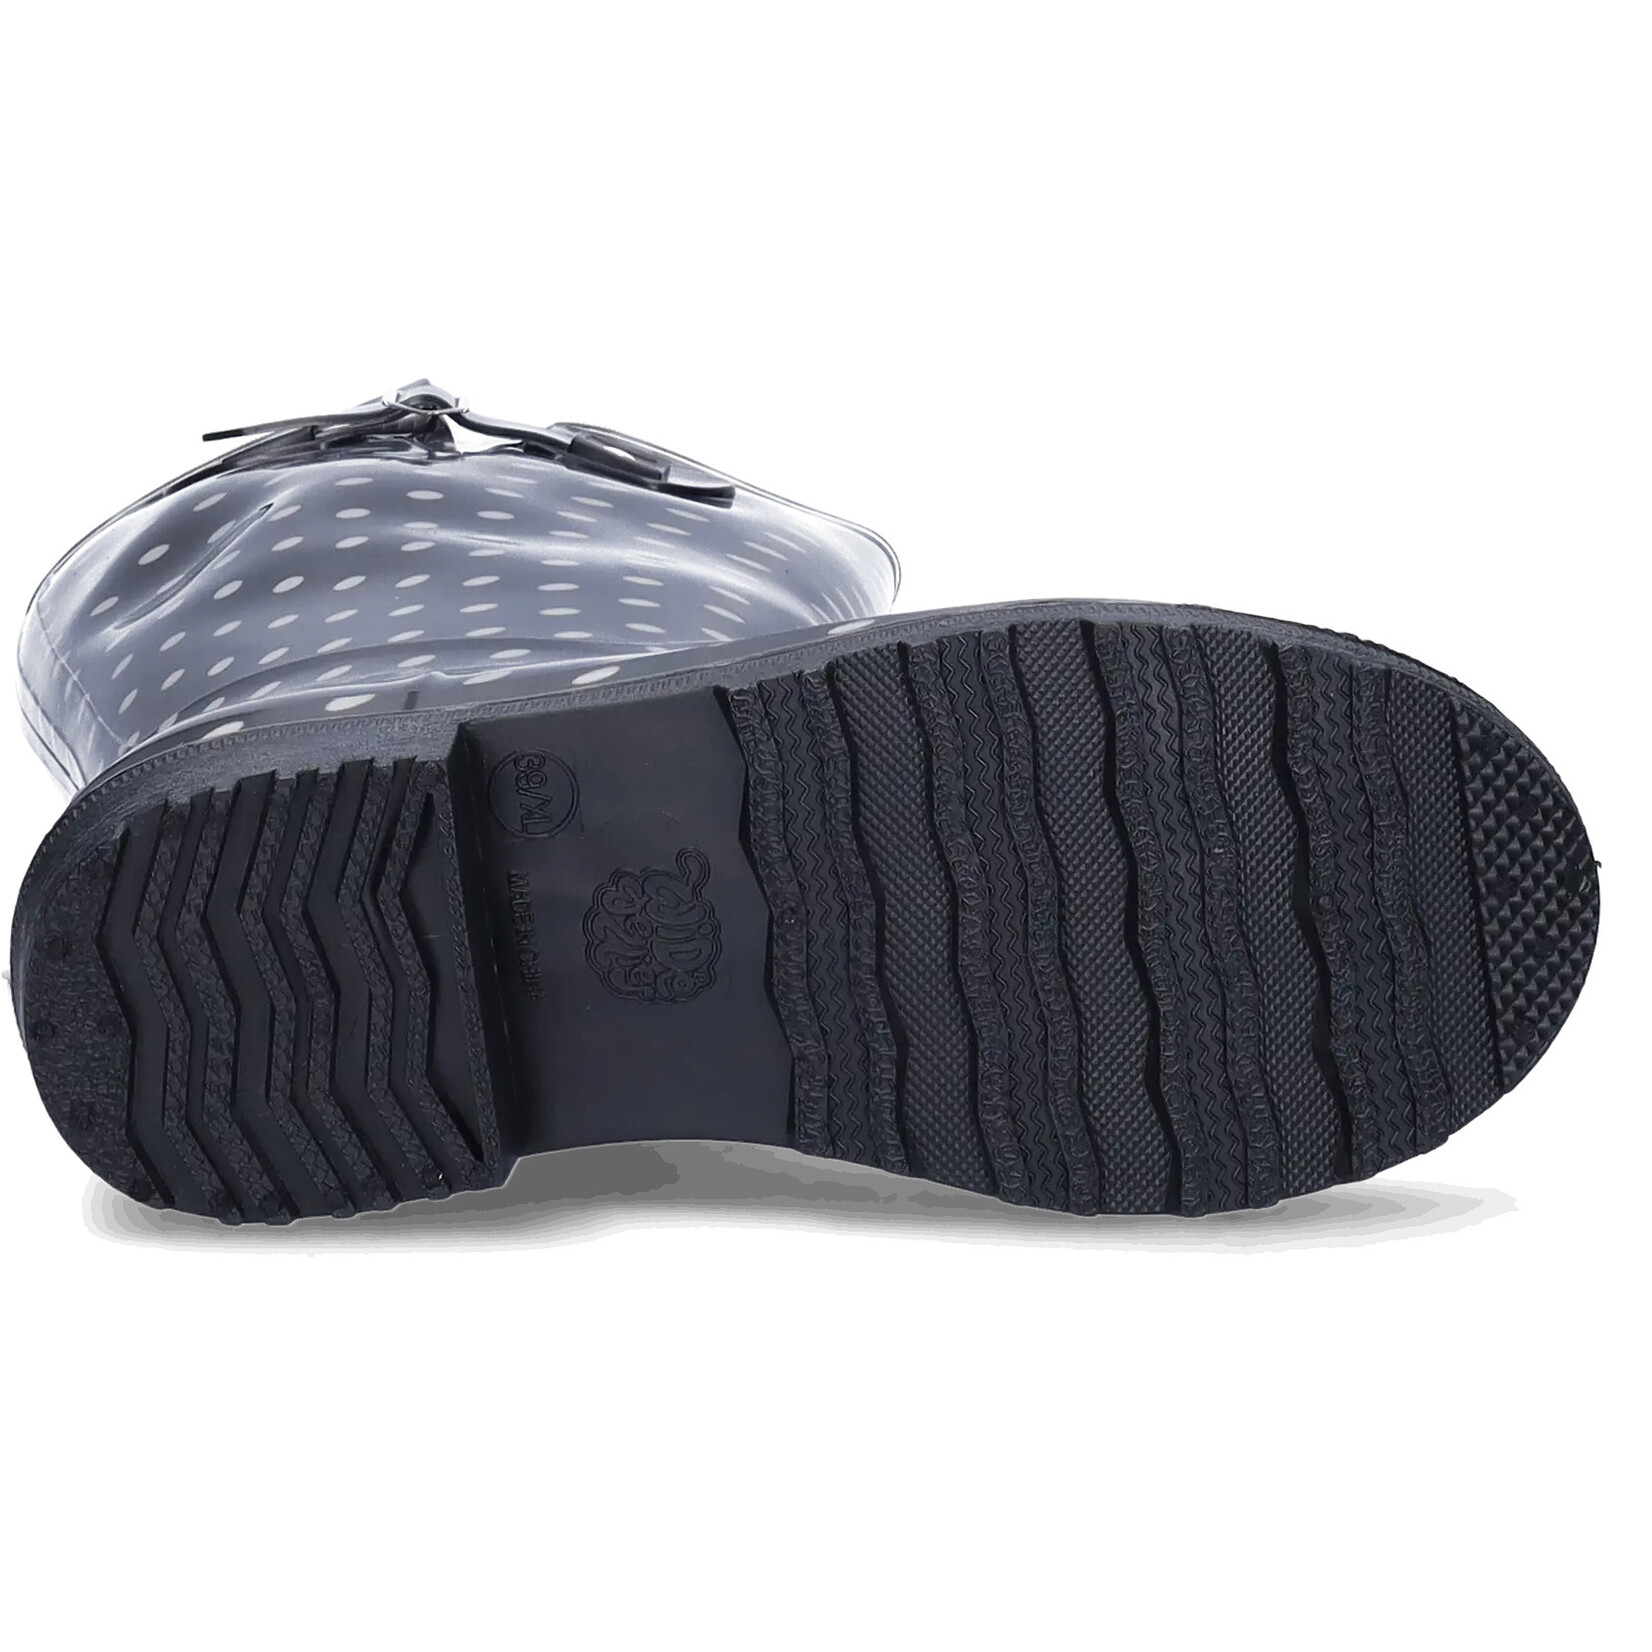 JJ Footwear Wellies - Black/Wit polka dots